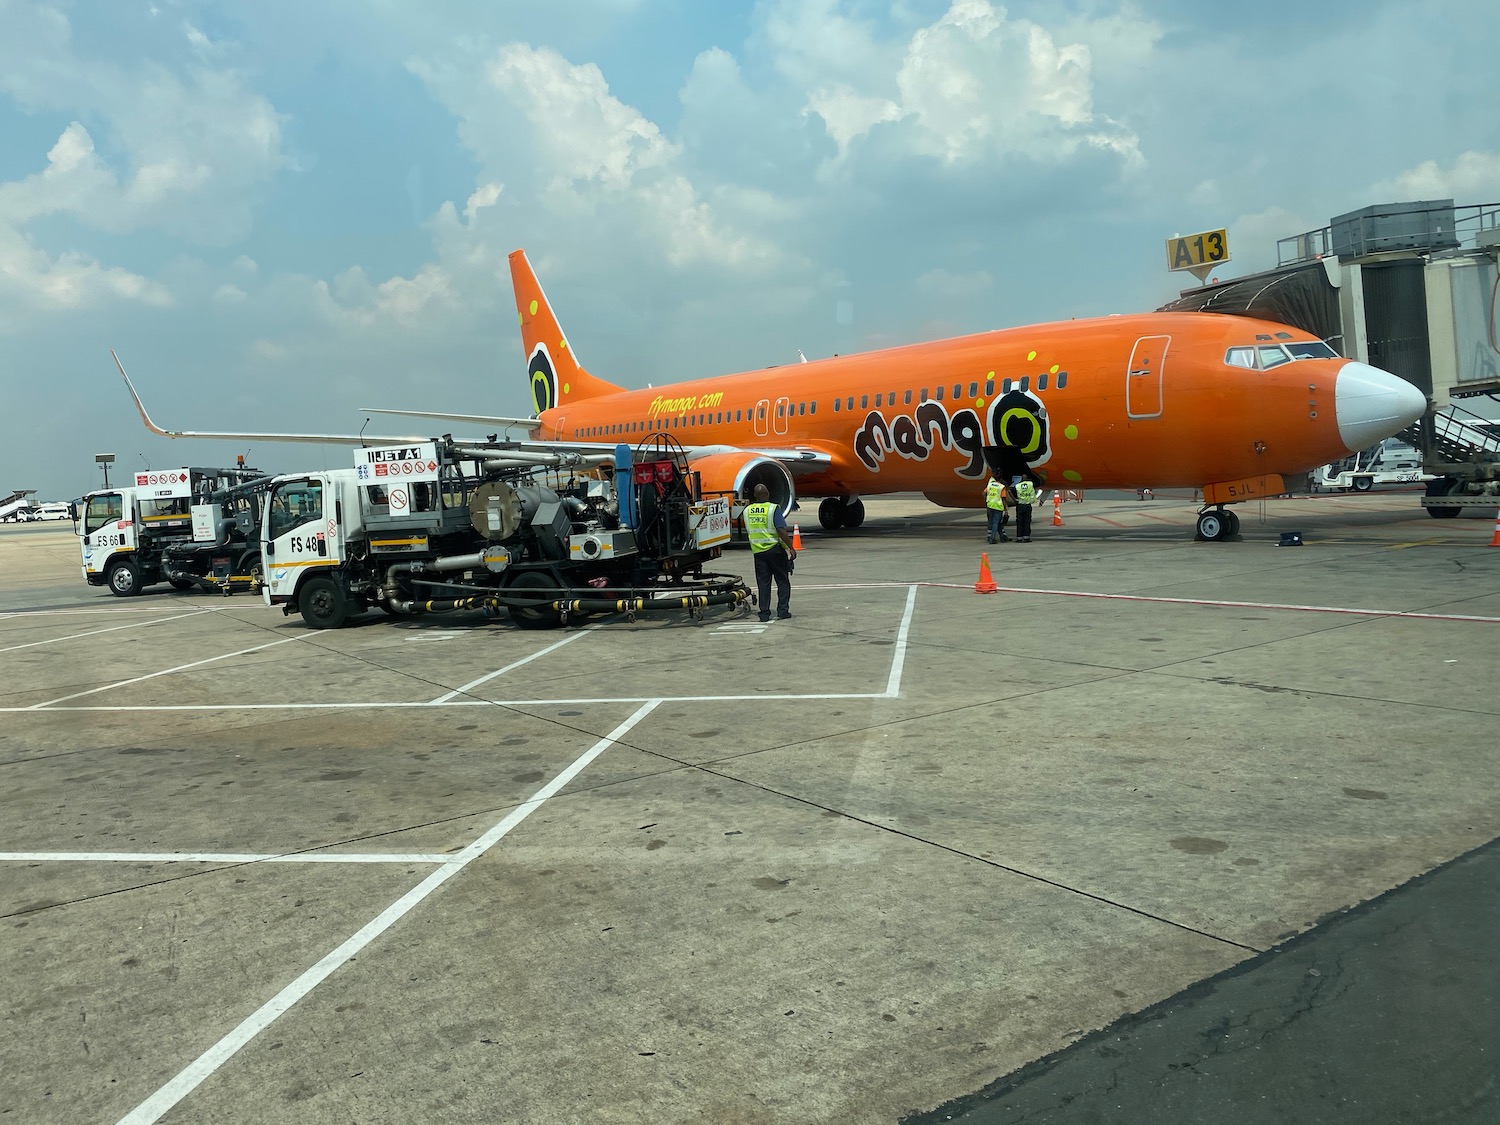 an orange airplane on a tarmac